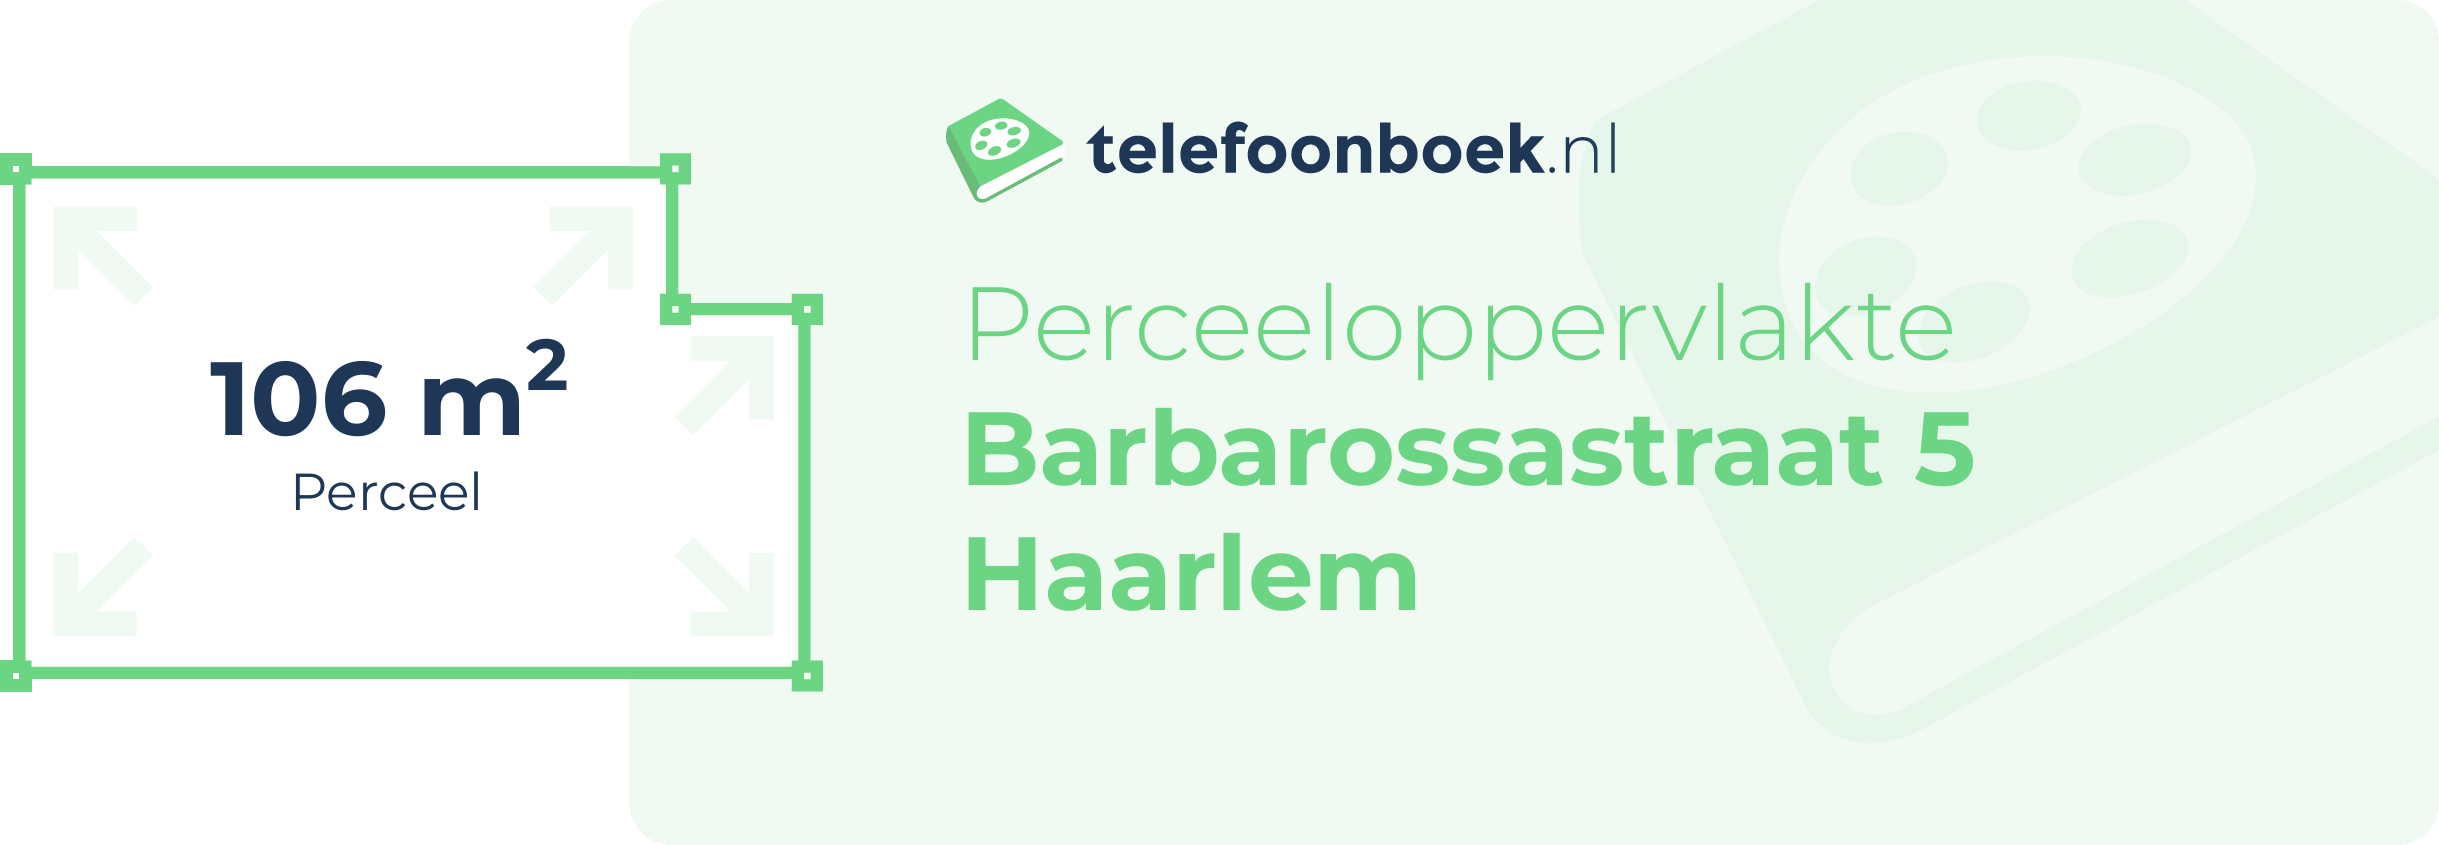 Perceeloppervlakte Barbarossastraat 5 Haarlem